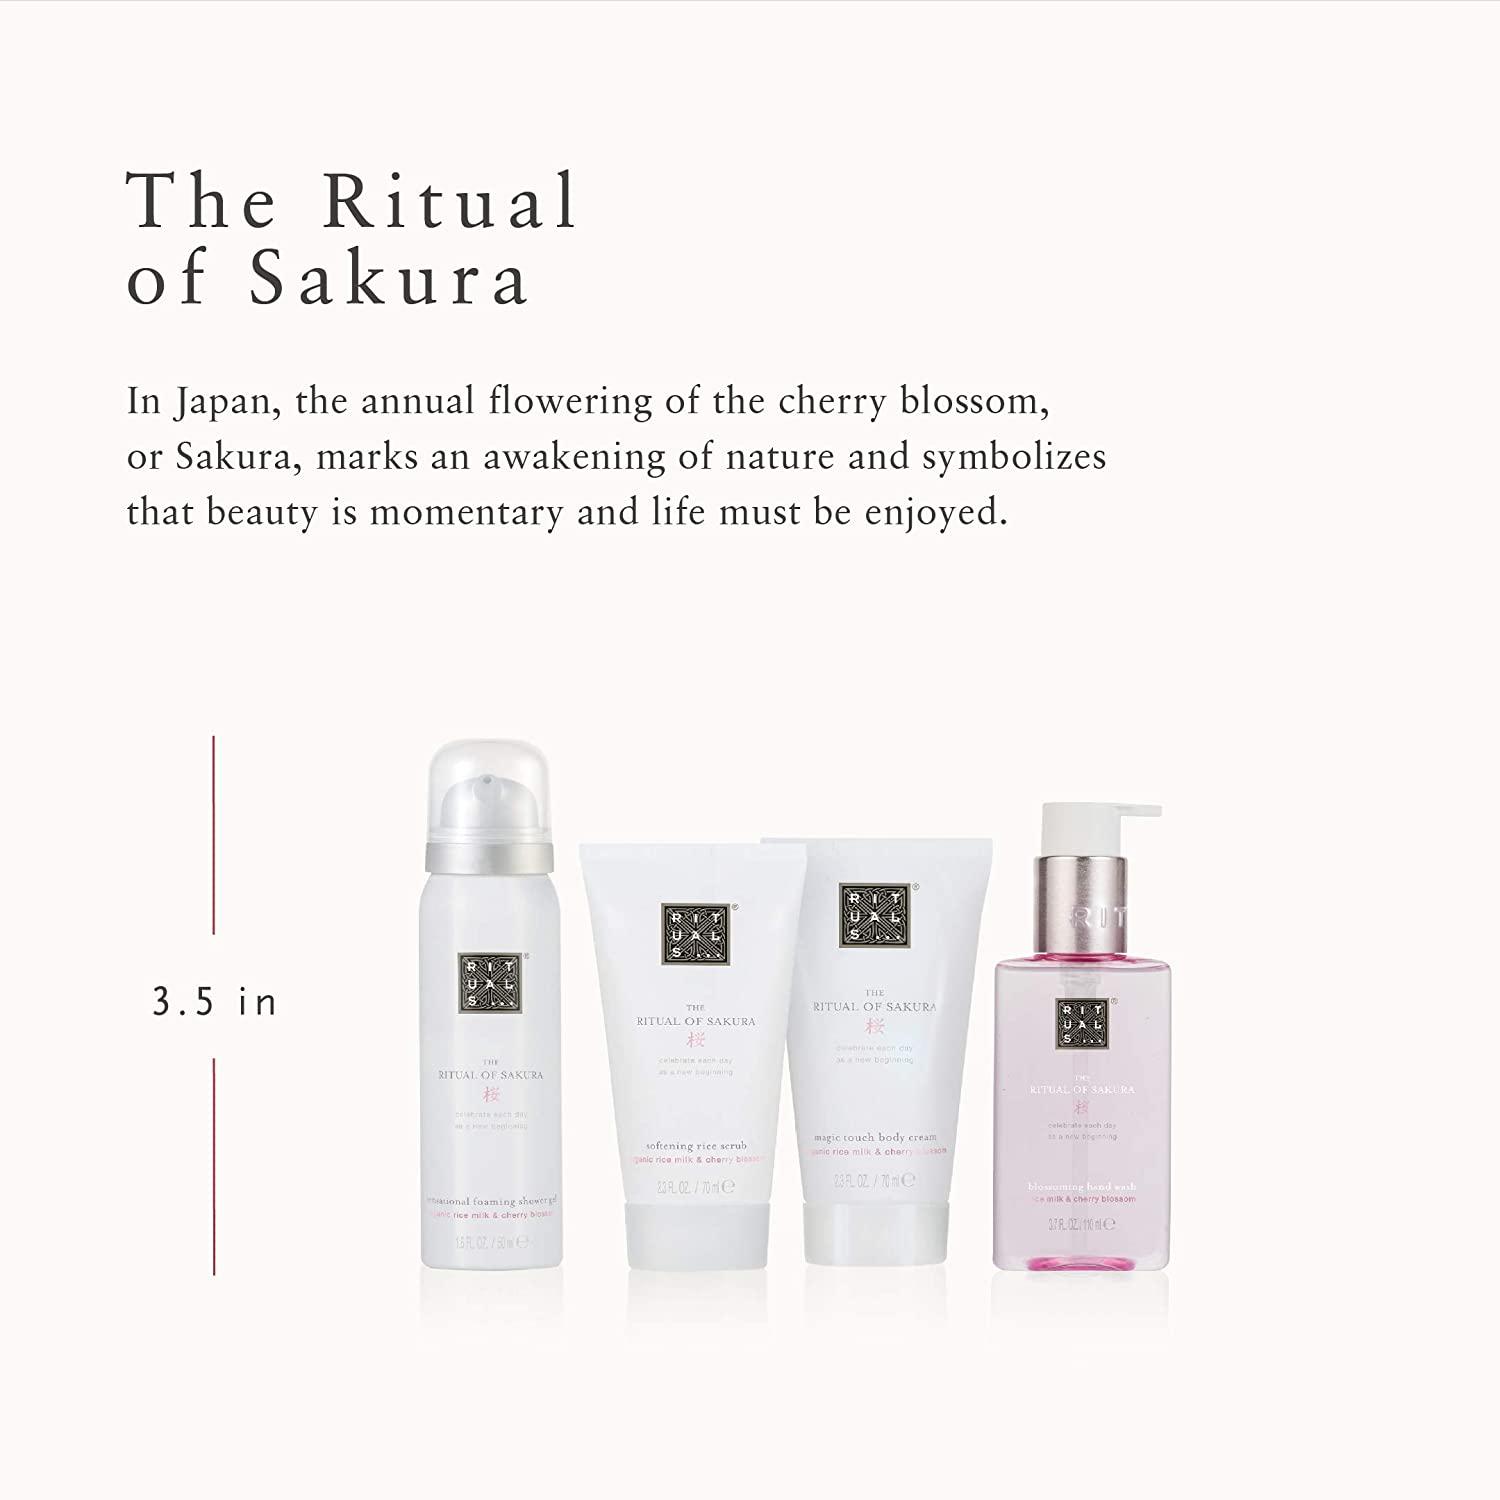 RITUALS Sakura Renewing Gift Set - Foaming Shower Gel, Body Scrub, Body  Cream & Hand Soap with Cherry Blossom & Rice Milk - Small